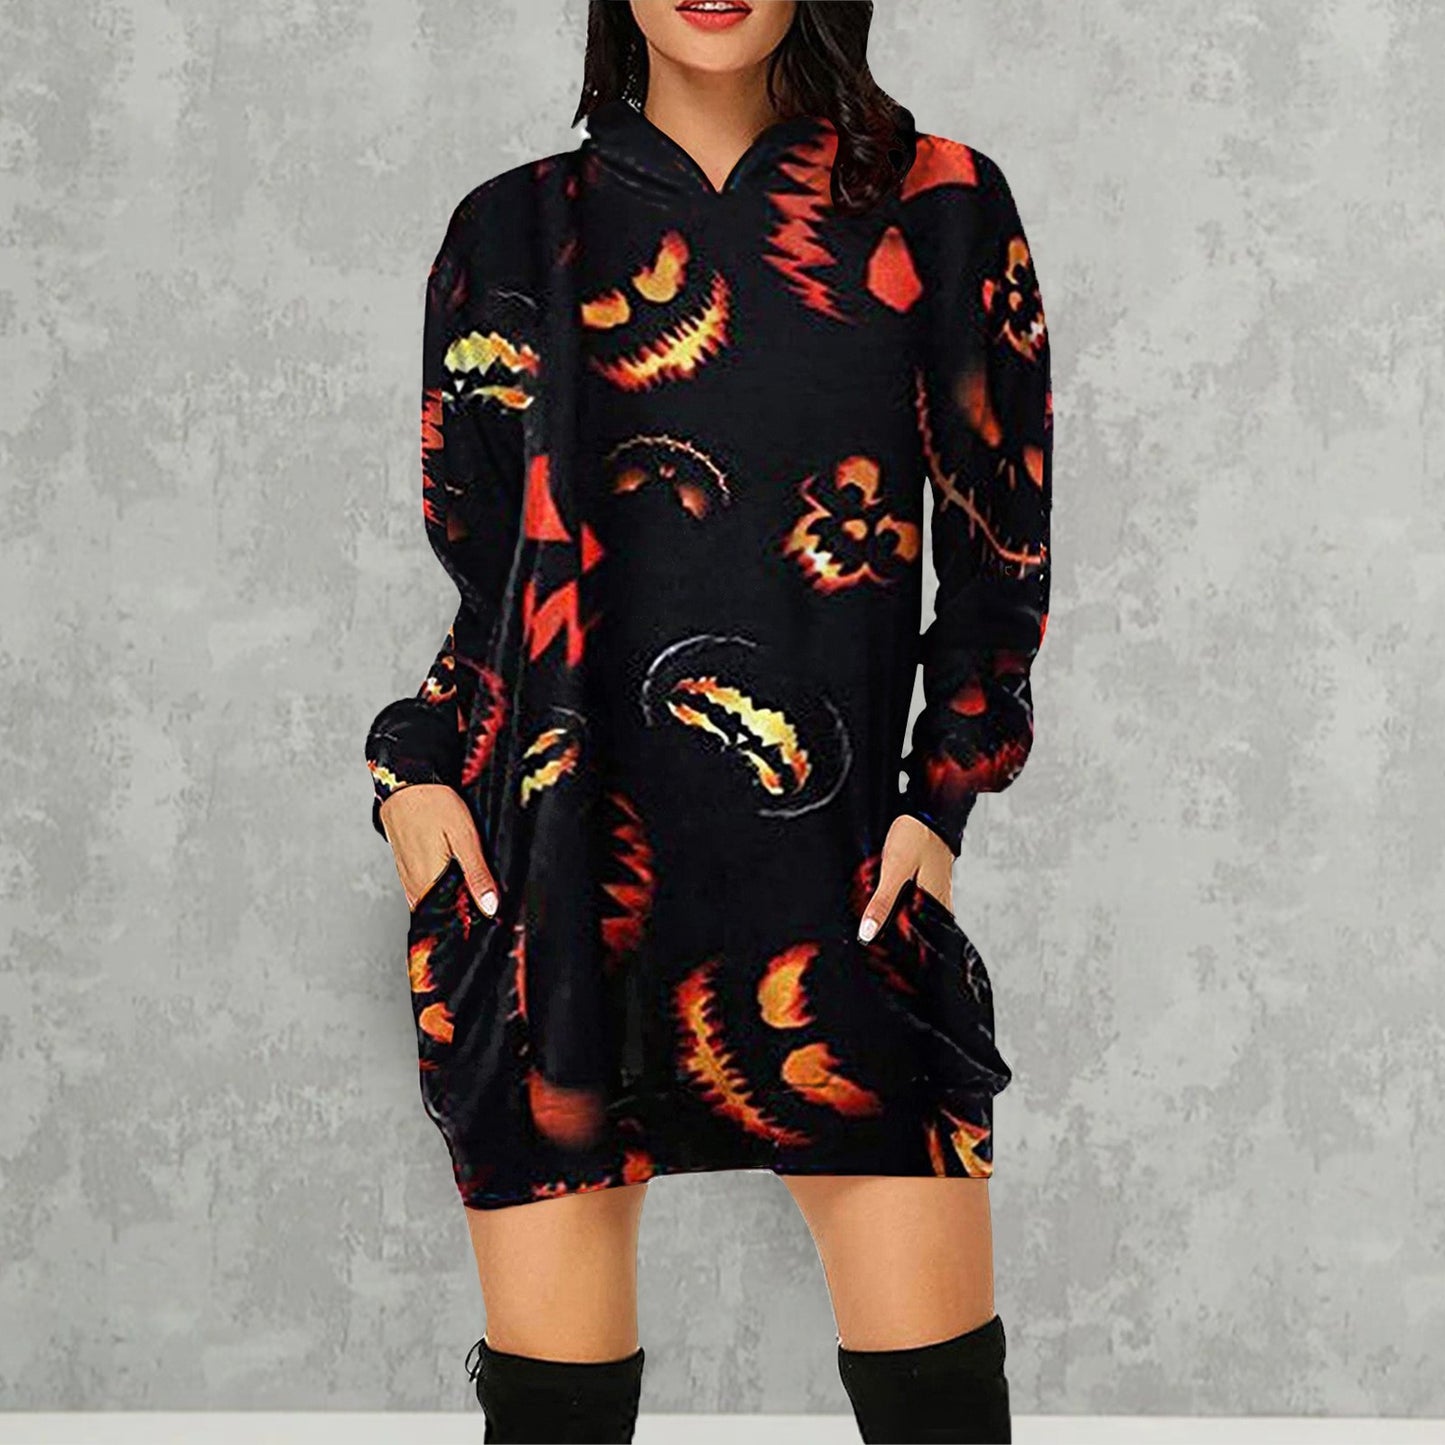 Halloween Pumpkin Design Long Sleeves Hoodies for Women